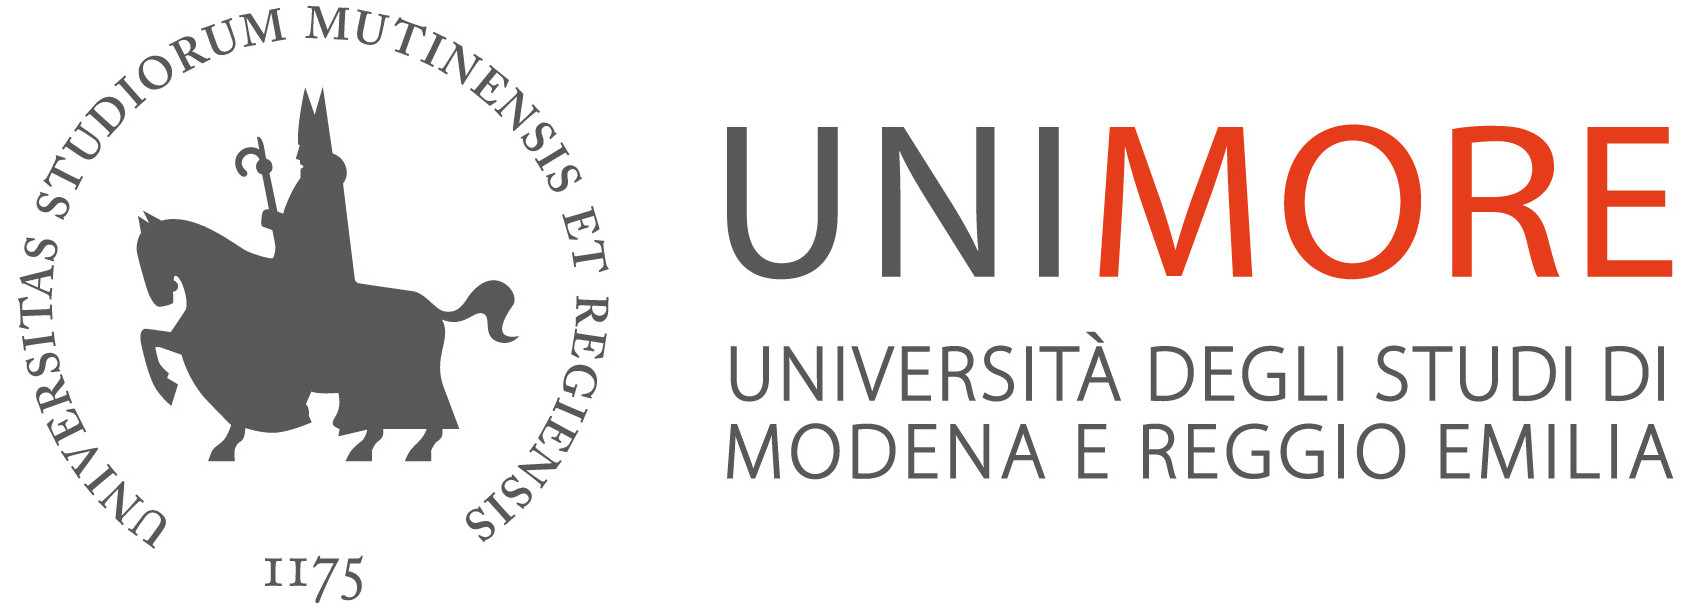 University of Modena and Reggio Emilia - Unimore